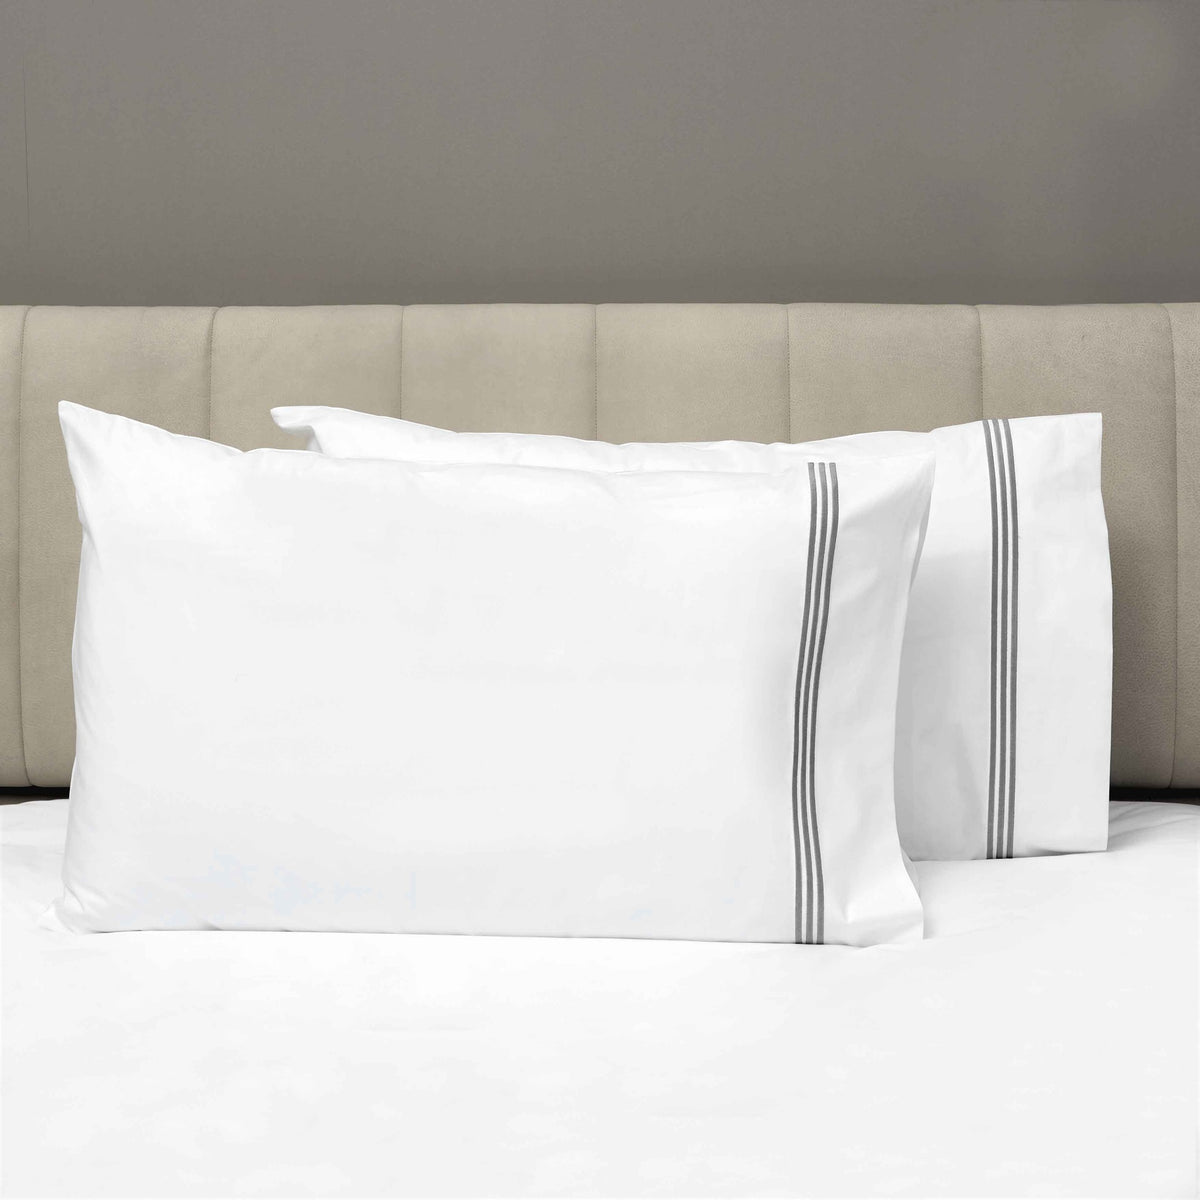 Pair of Pillowcases of Signoria Platinum Percale Bedding in White/Lead Grey Color